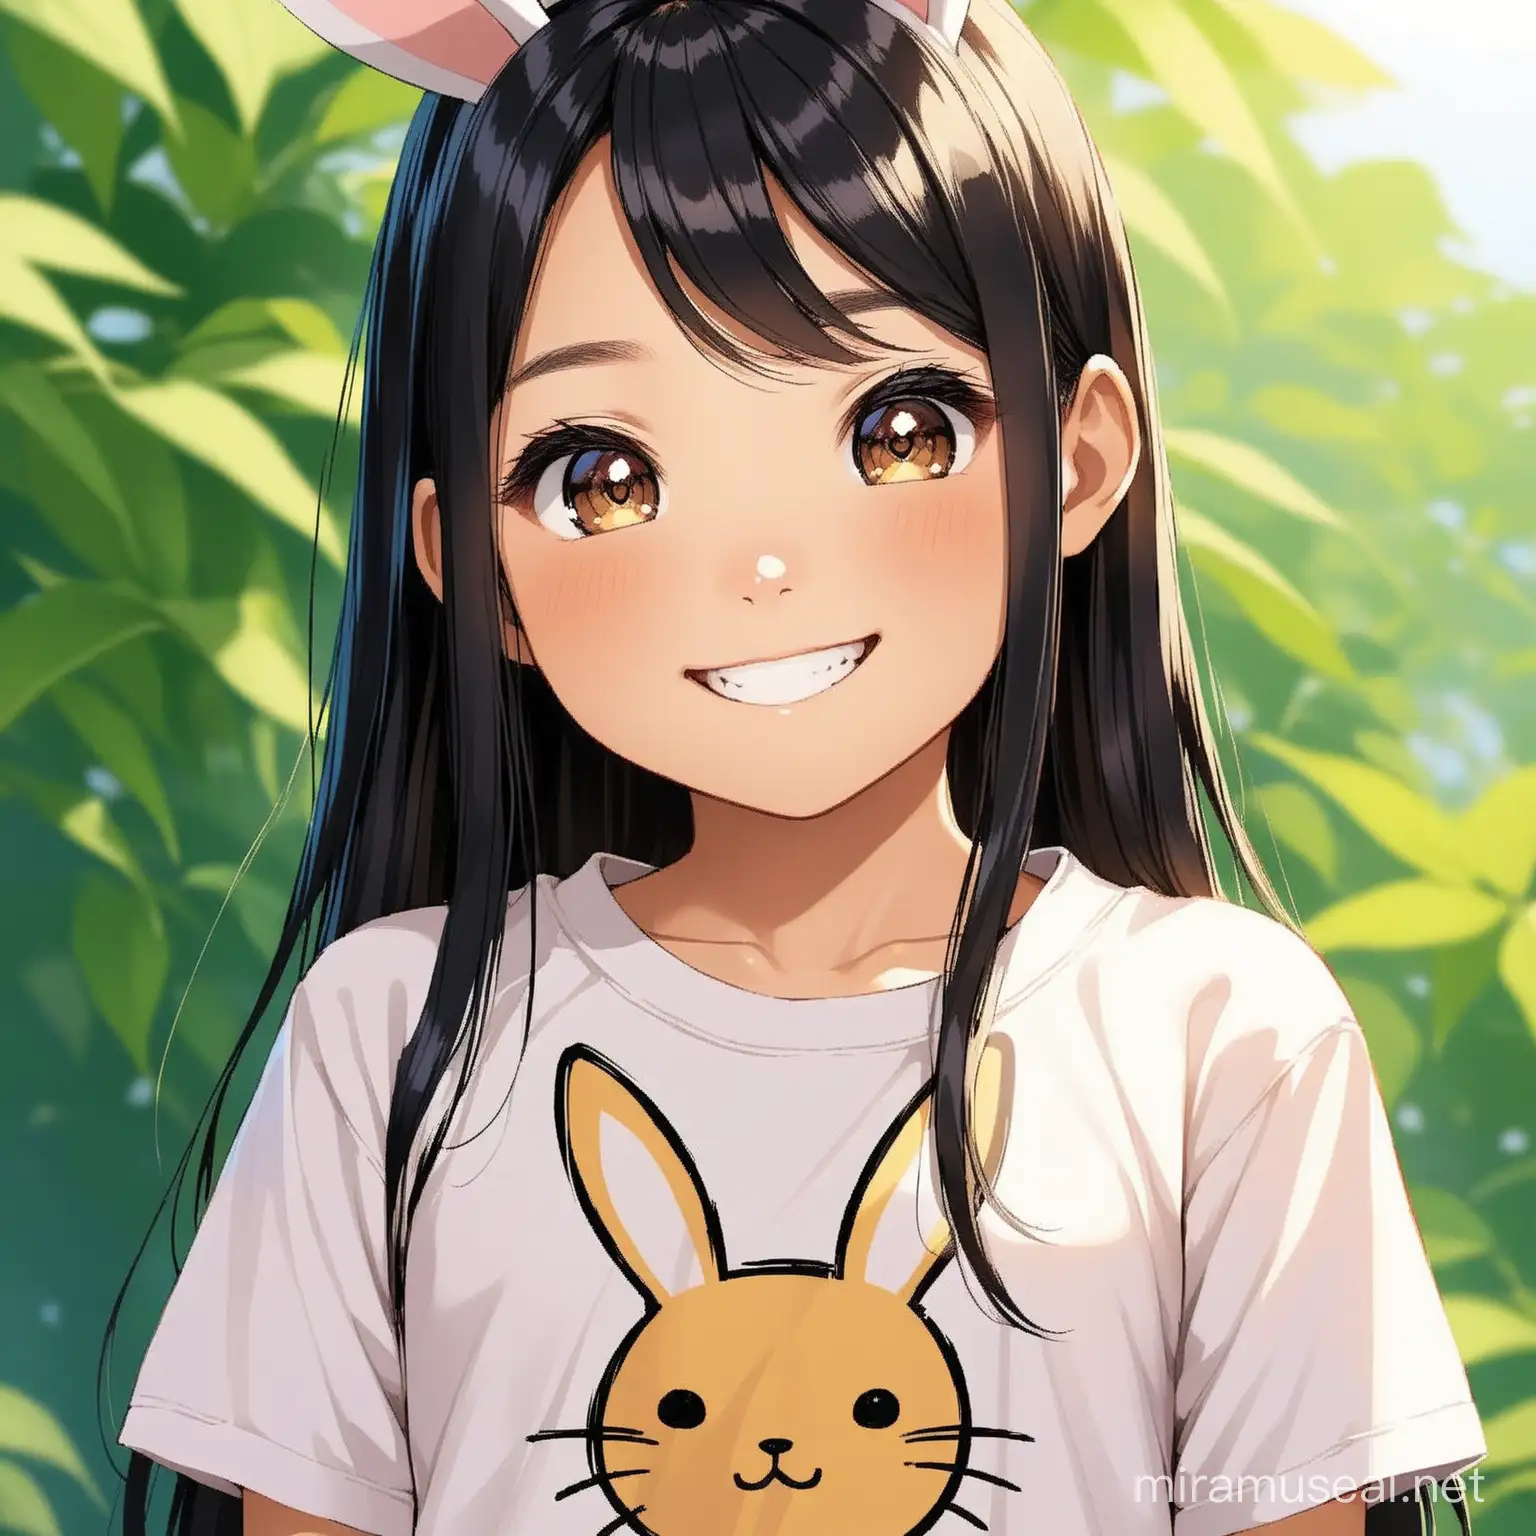 Smiling Thai Girl with Long Black Hair and Bunny Shirt